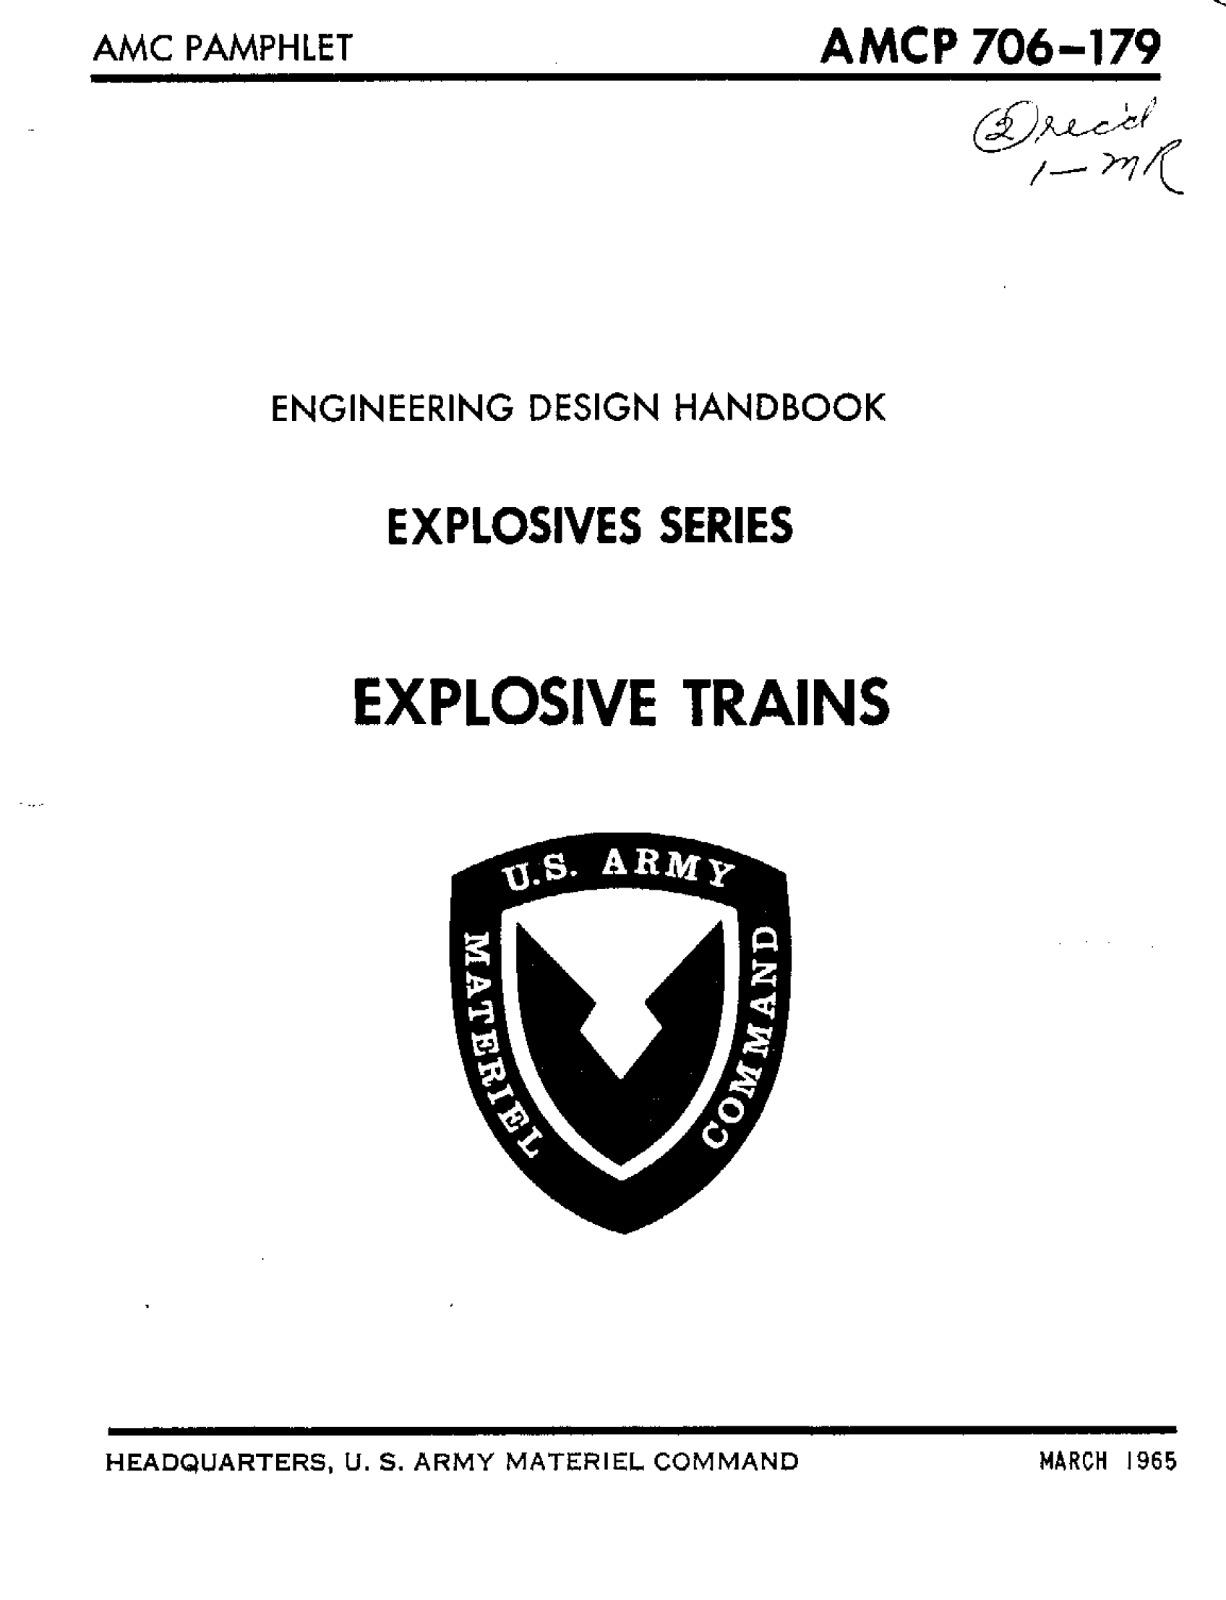 155 page 1965 AMCP 706-179 EXPLOSIVE TRAINS Engineering Design Handbook on CD